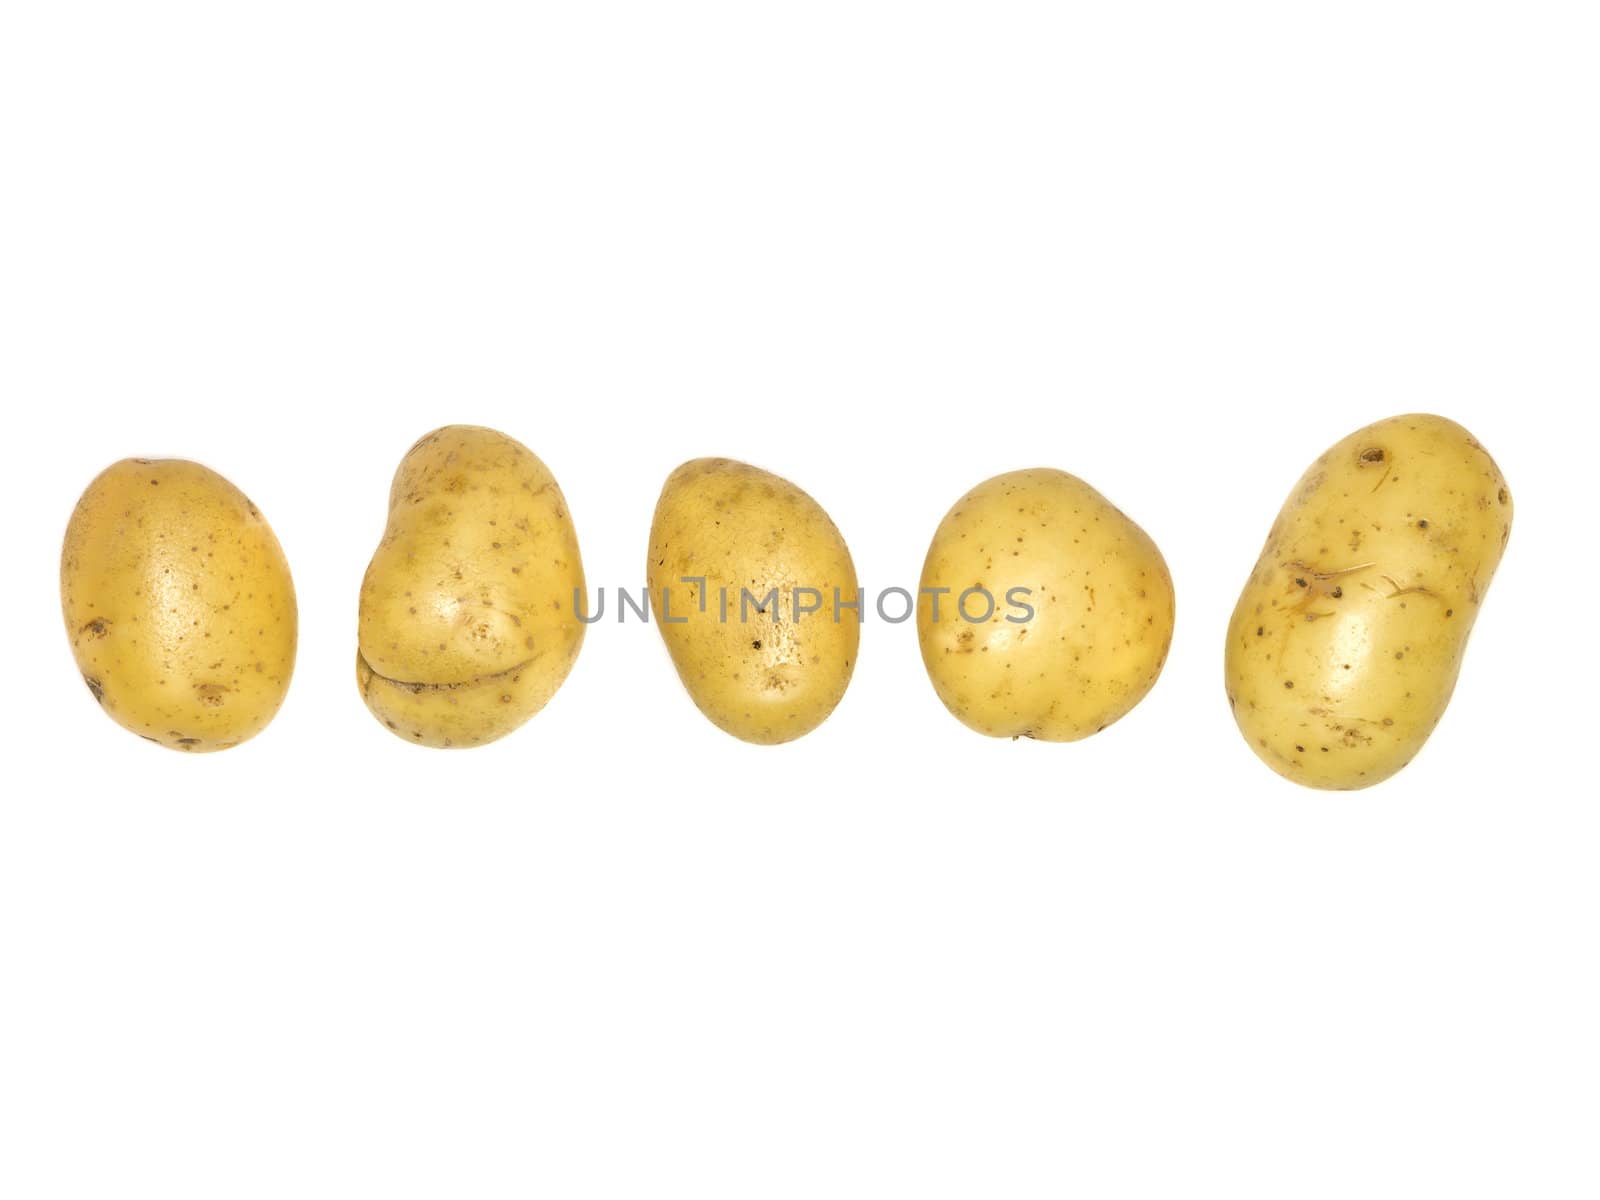 Potatoes on a row by gemenacom